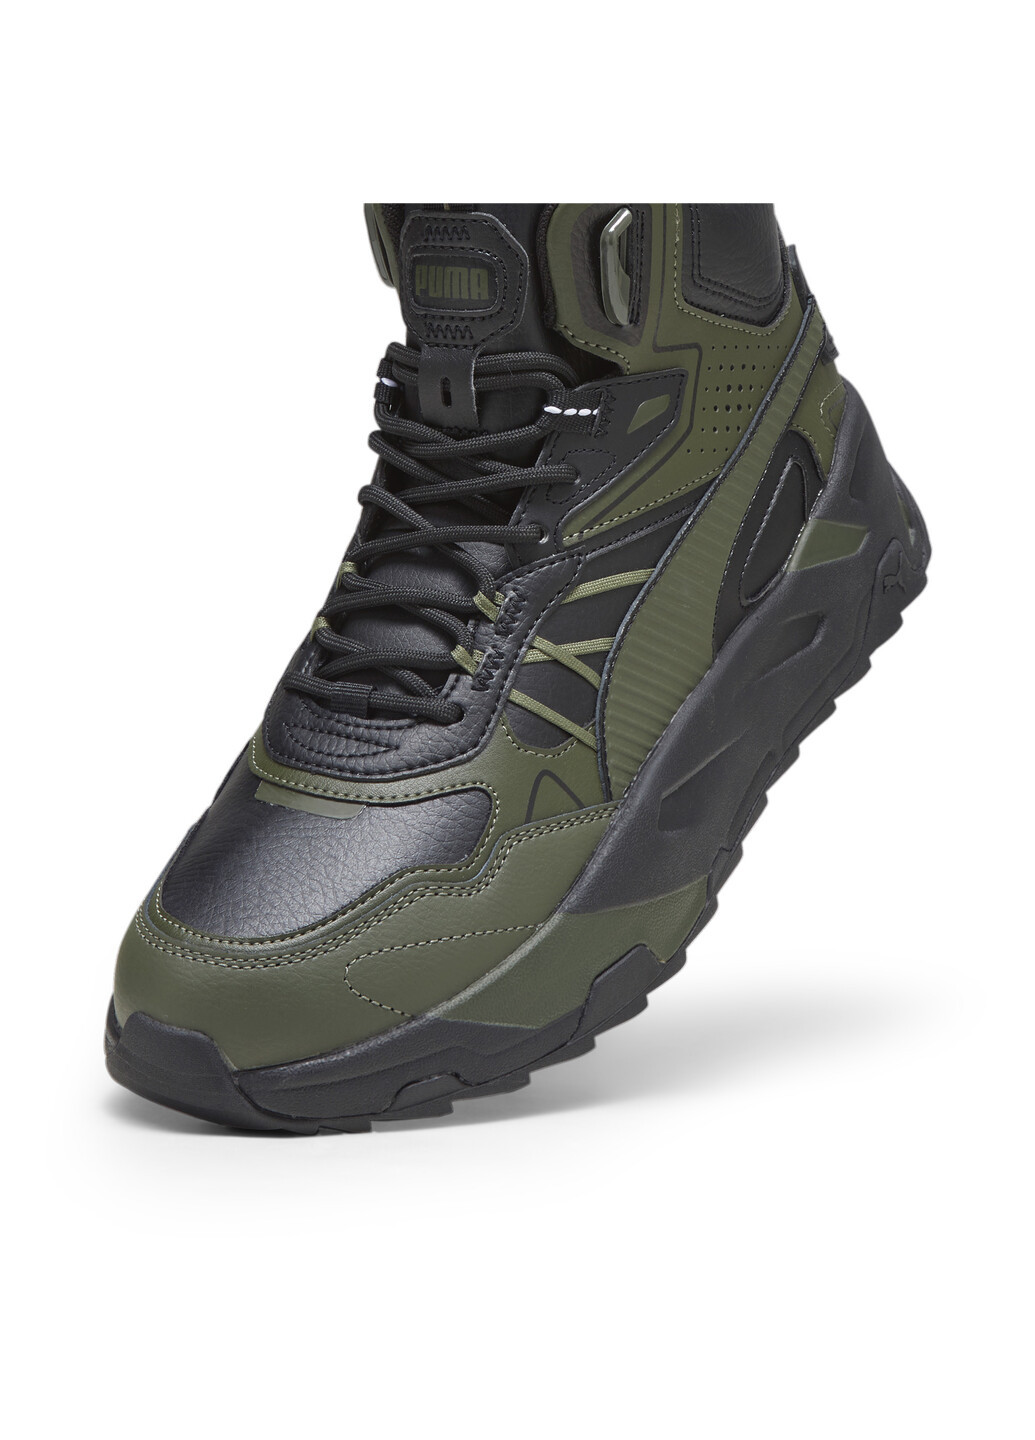 Черные кроссовки trinity mid hybrid men’s leather sneakers Puma